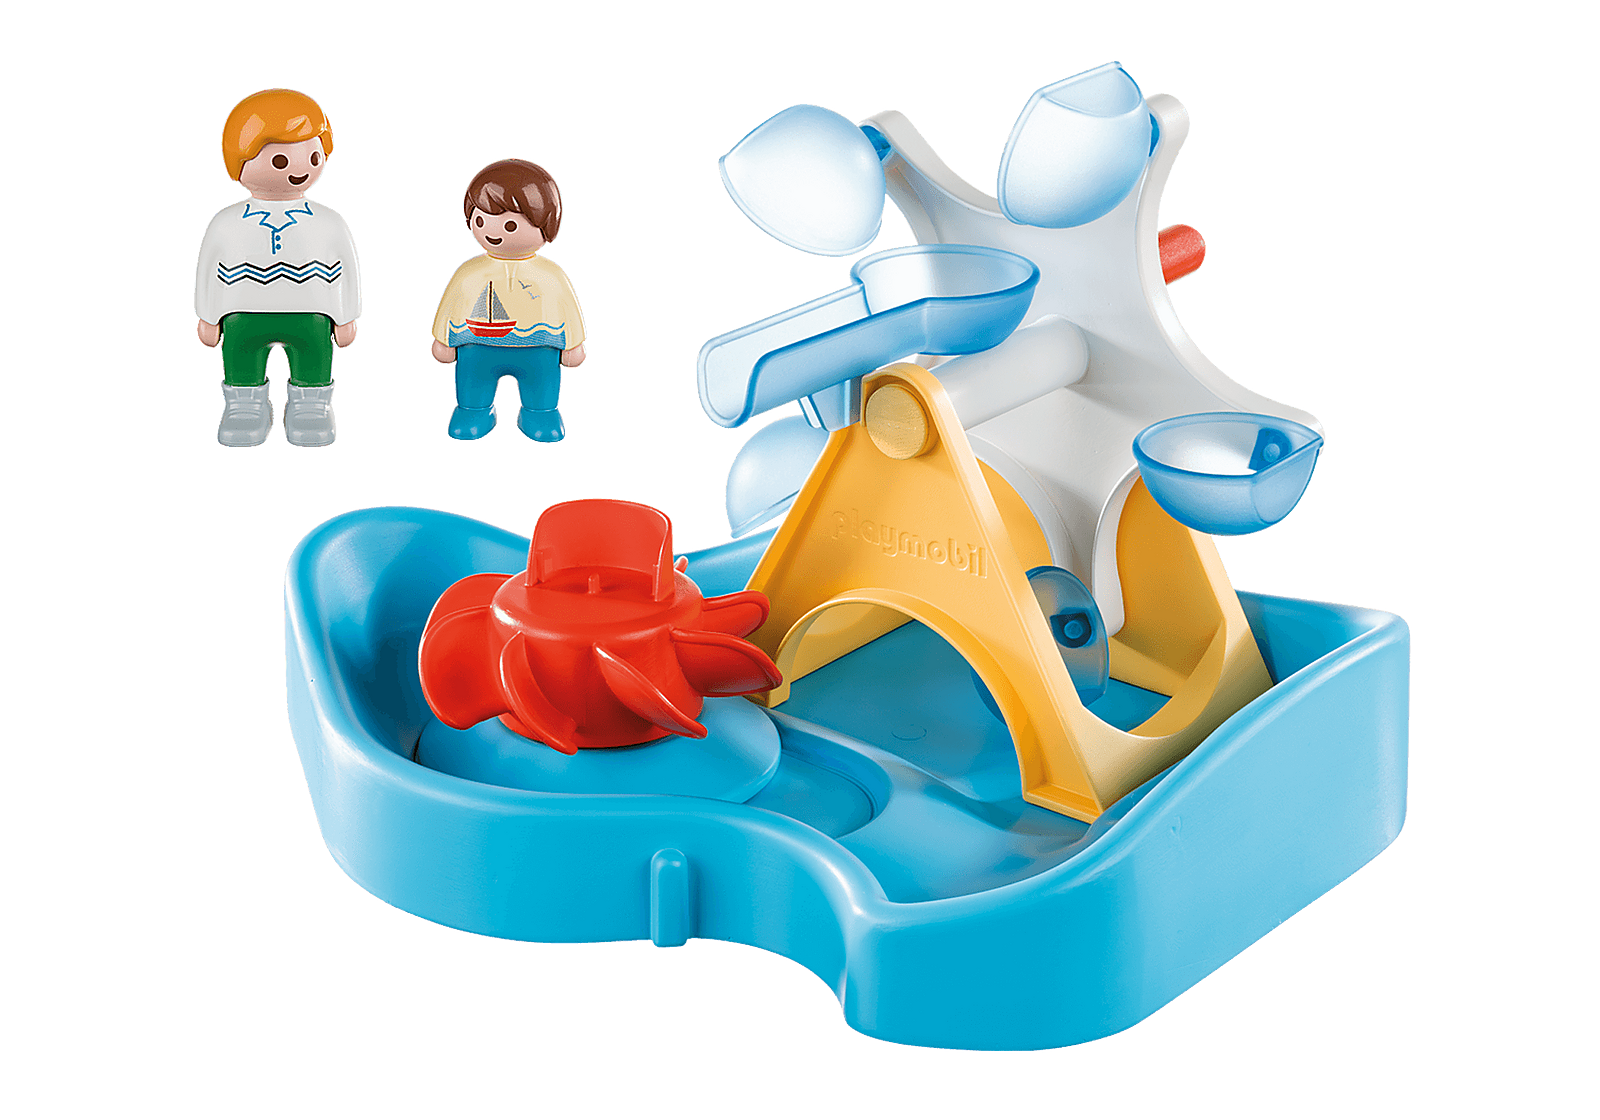 Playmobil 1.2.3 - Μικρό Aqua Park 70268